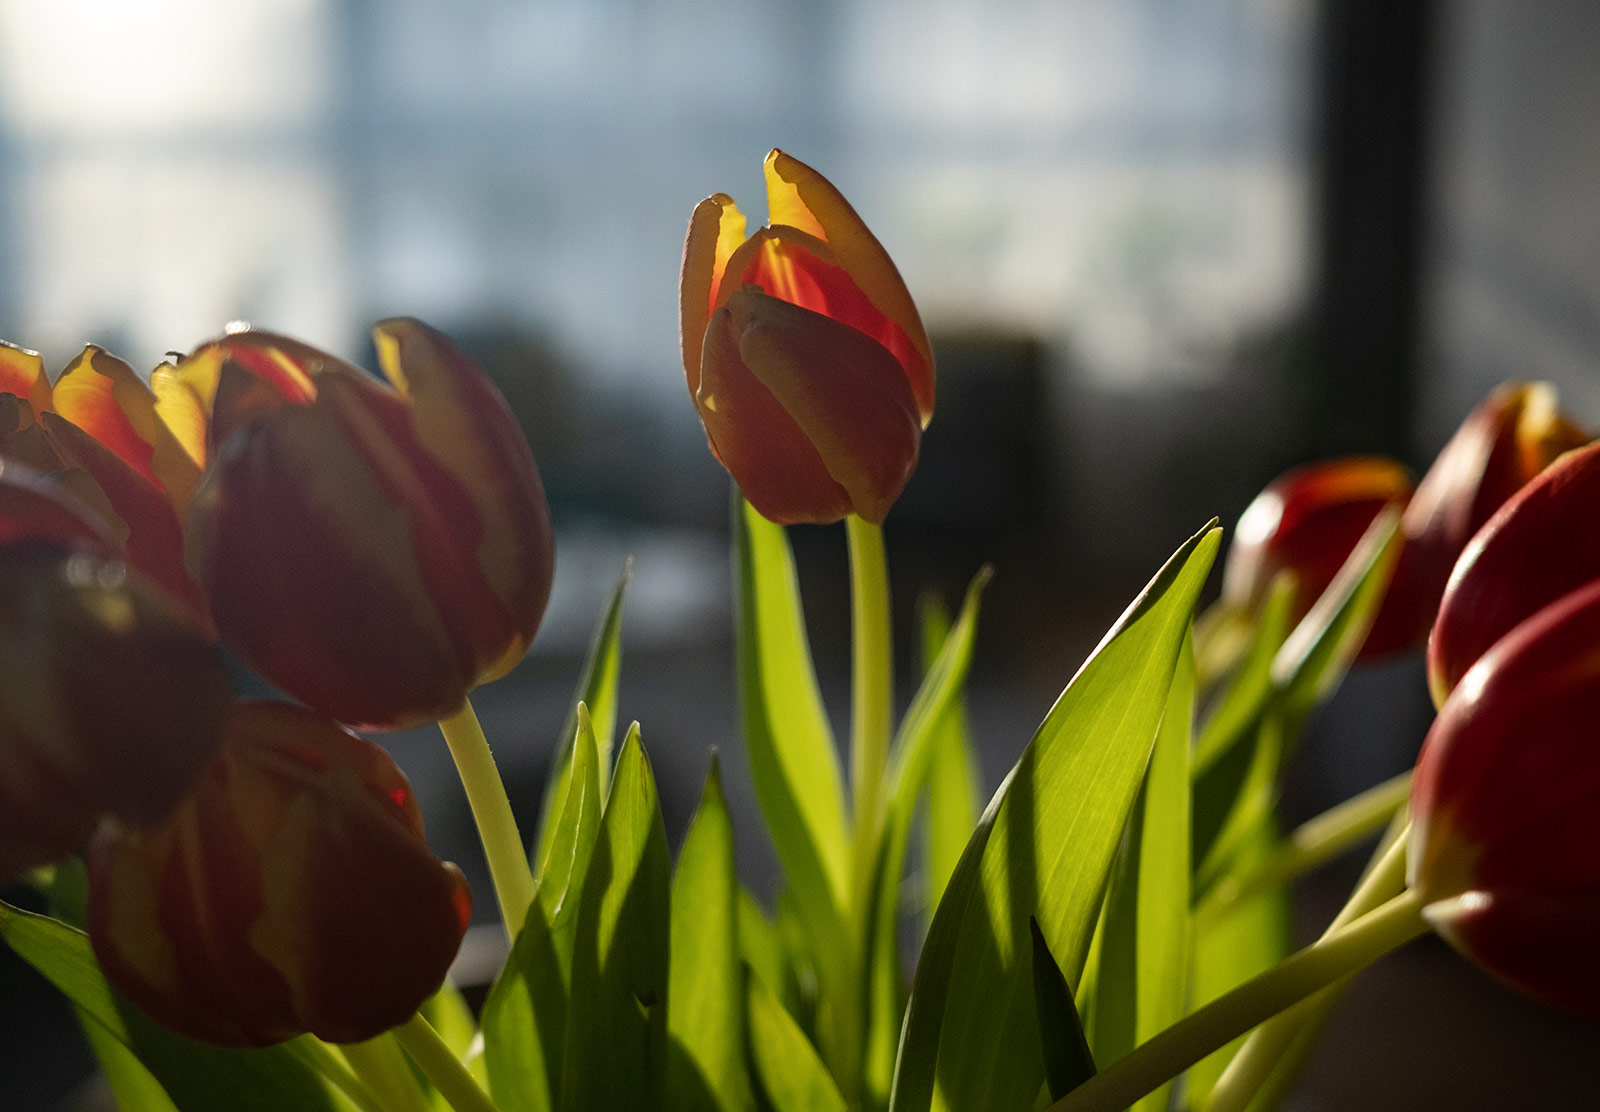 Tulips in the sun